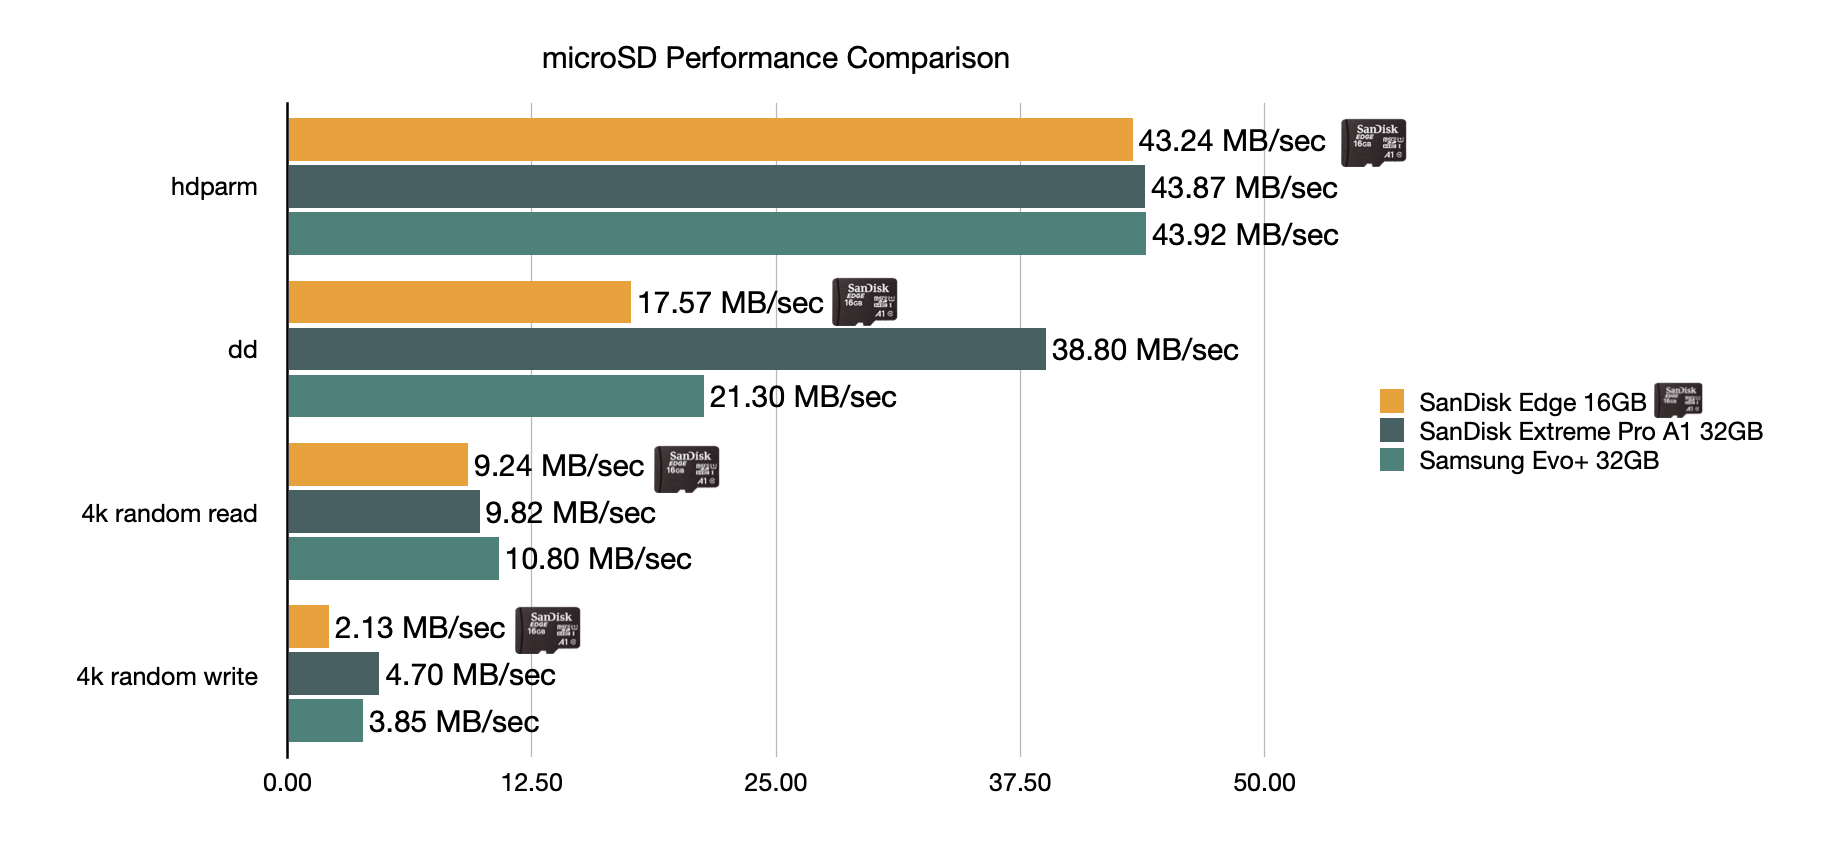 microSD card performance comparison - SanDisk Edge